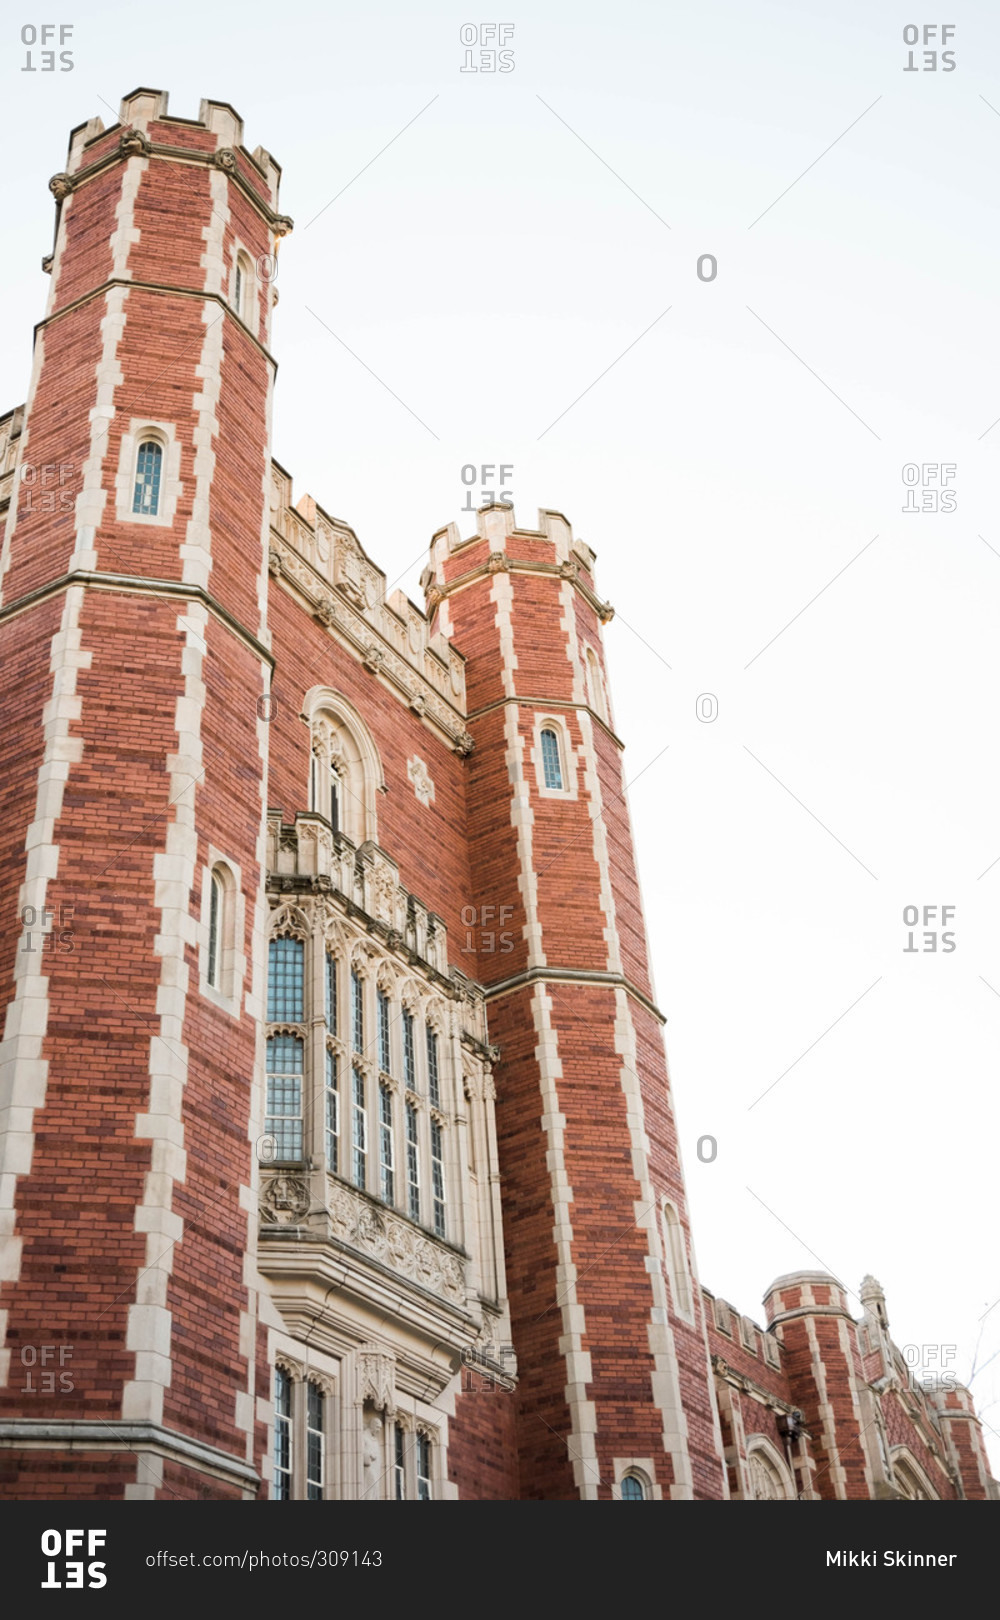 Tudor style building at the University of Oklahoma